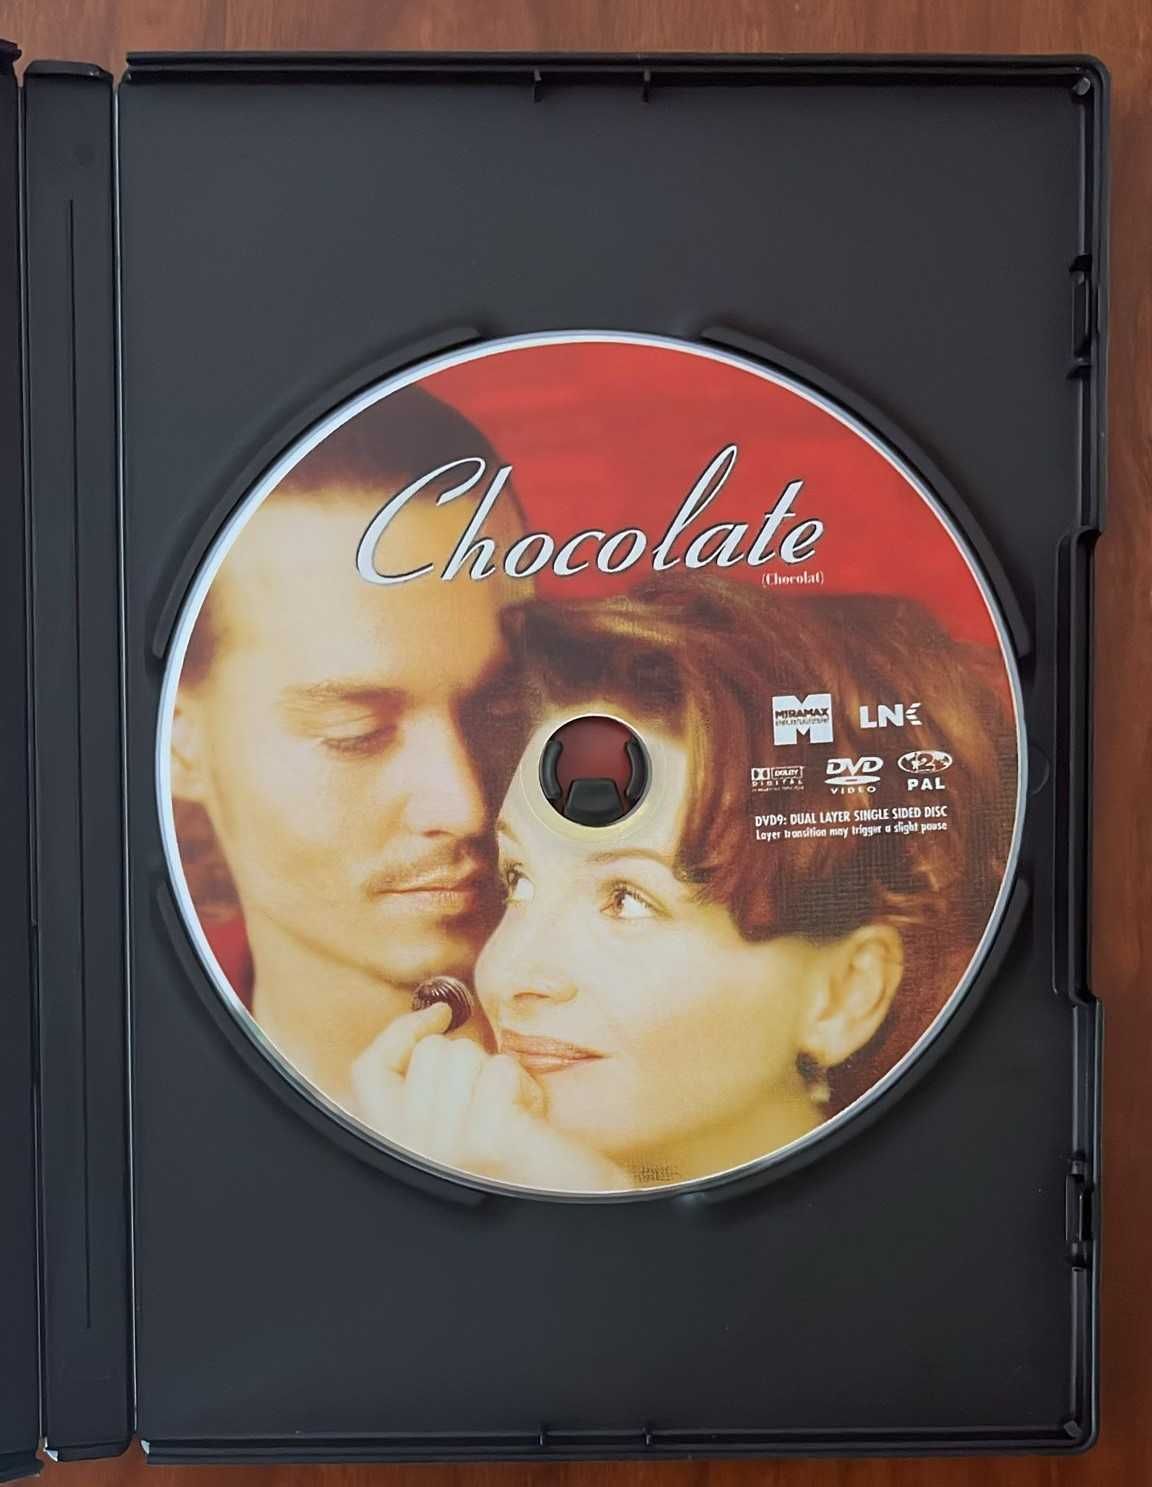 DVD "Chocolate "